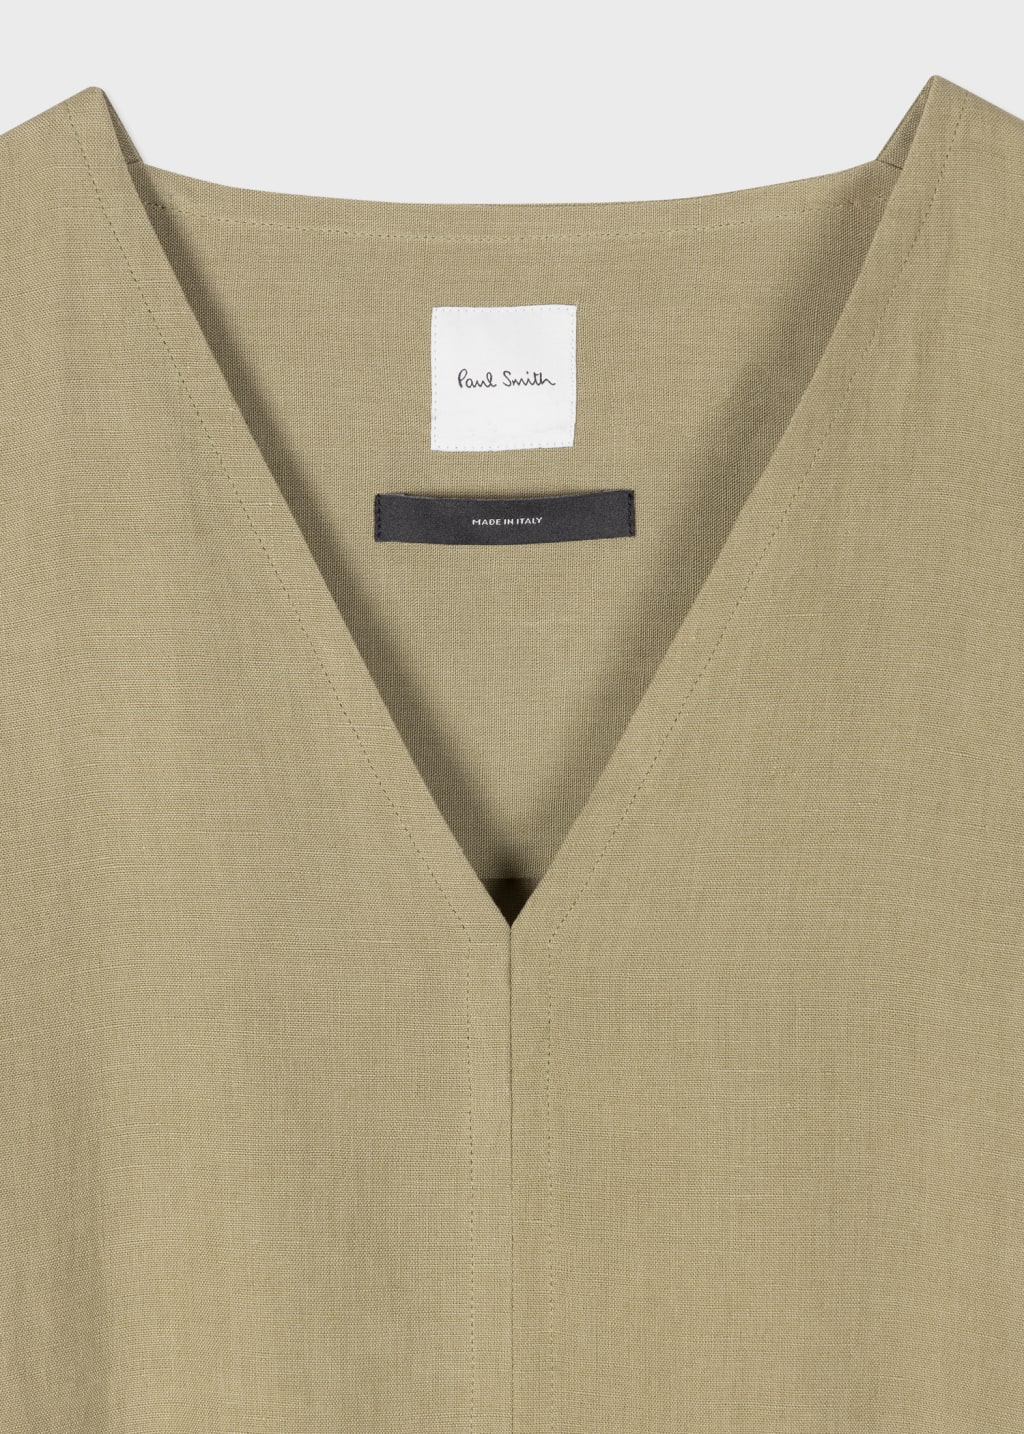 Detail View - Women's Pale Khaki Linen Tie Waist Dress Paul Smith